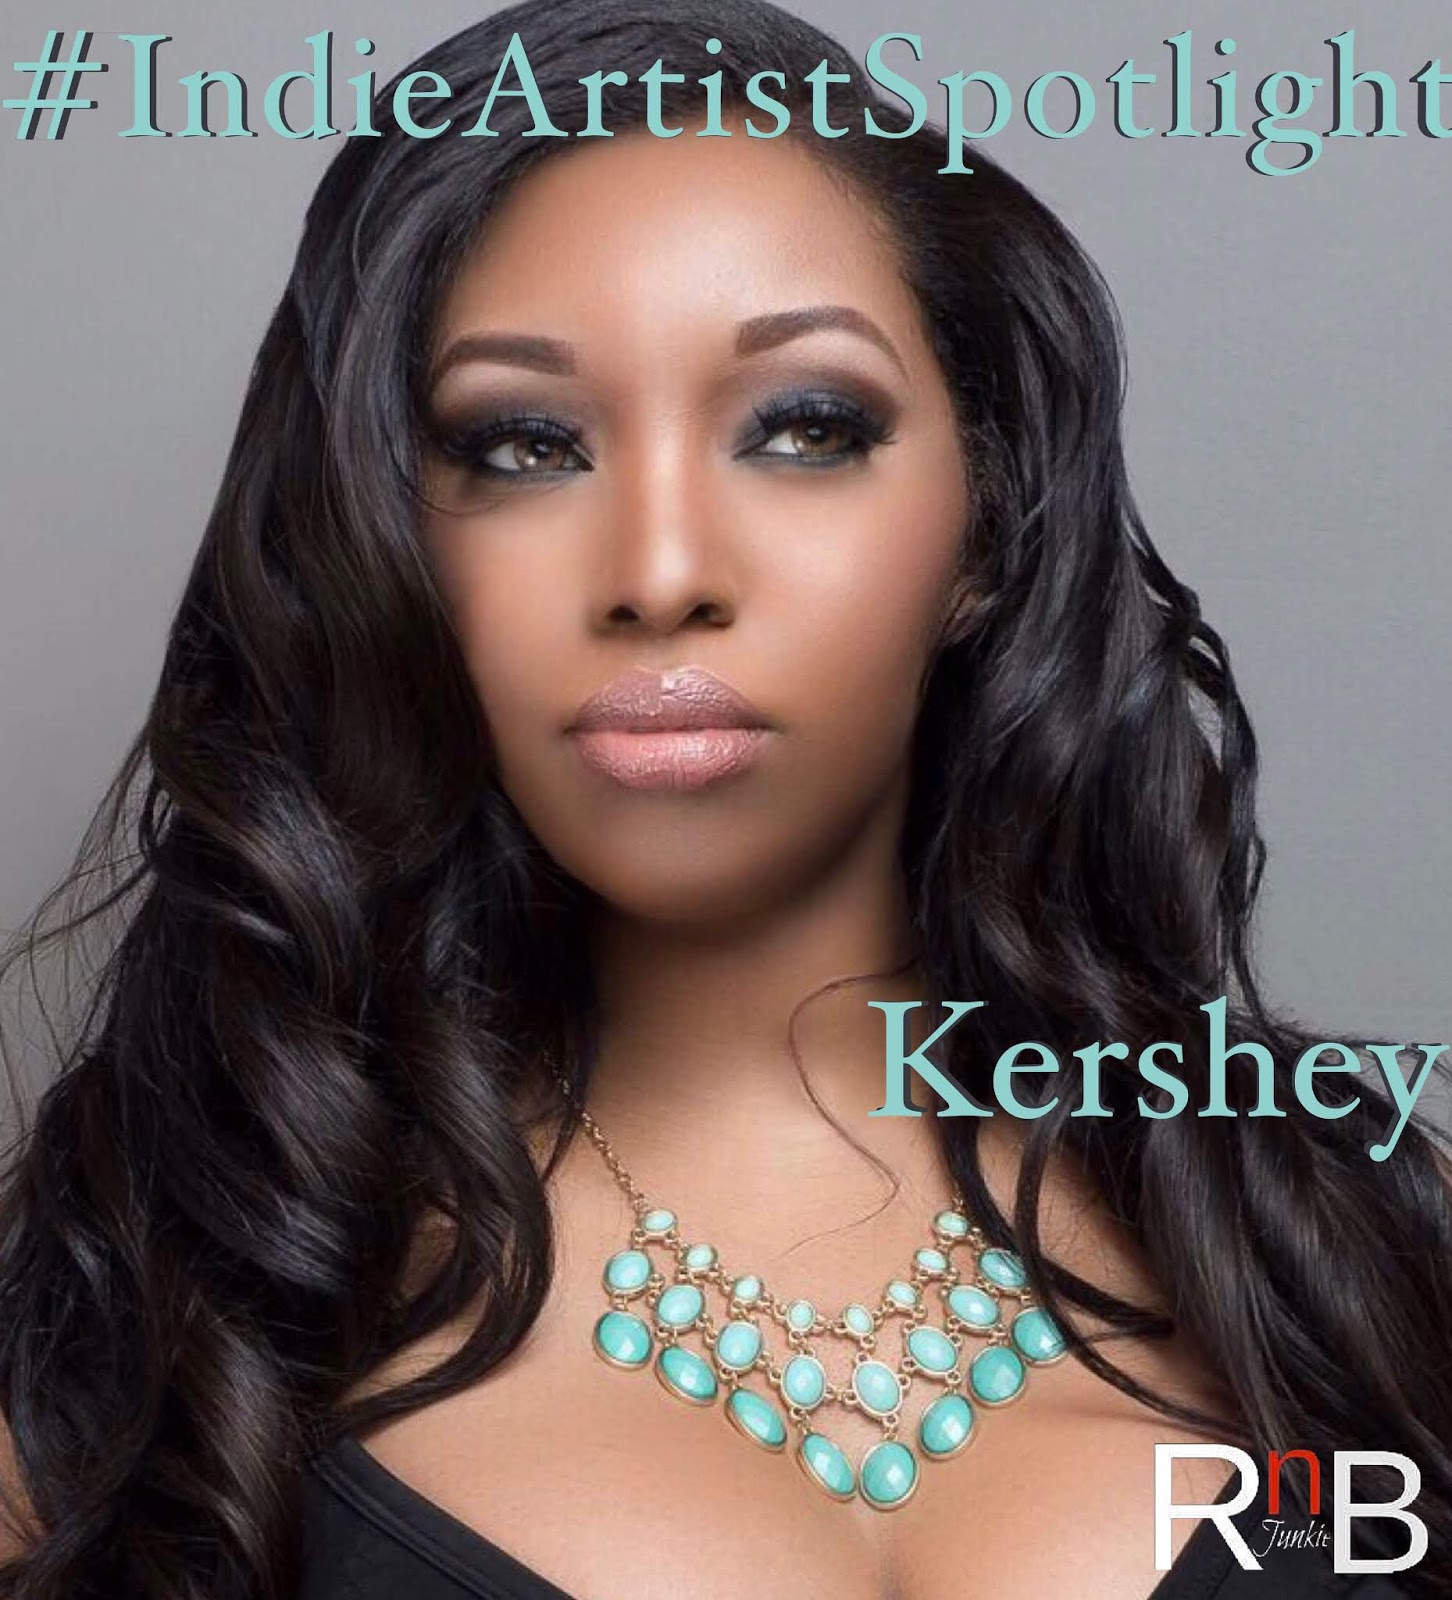 rnbjunkieofficial.com: #IndieArtistSpotlight - Kershey Interview